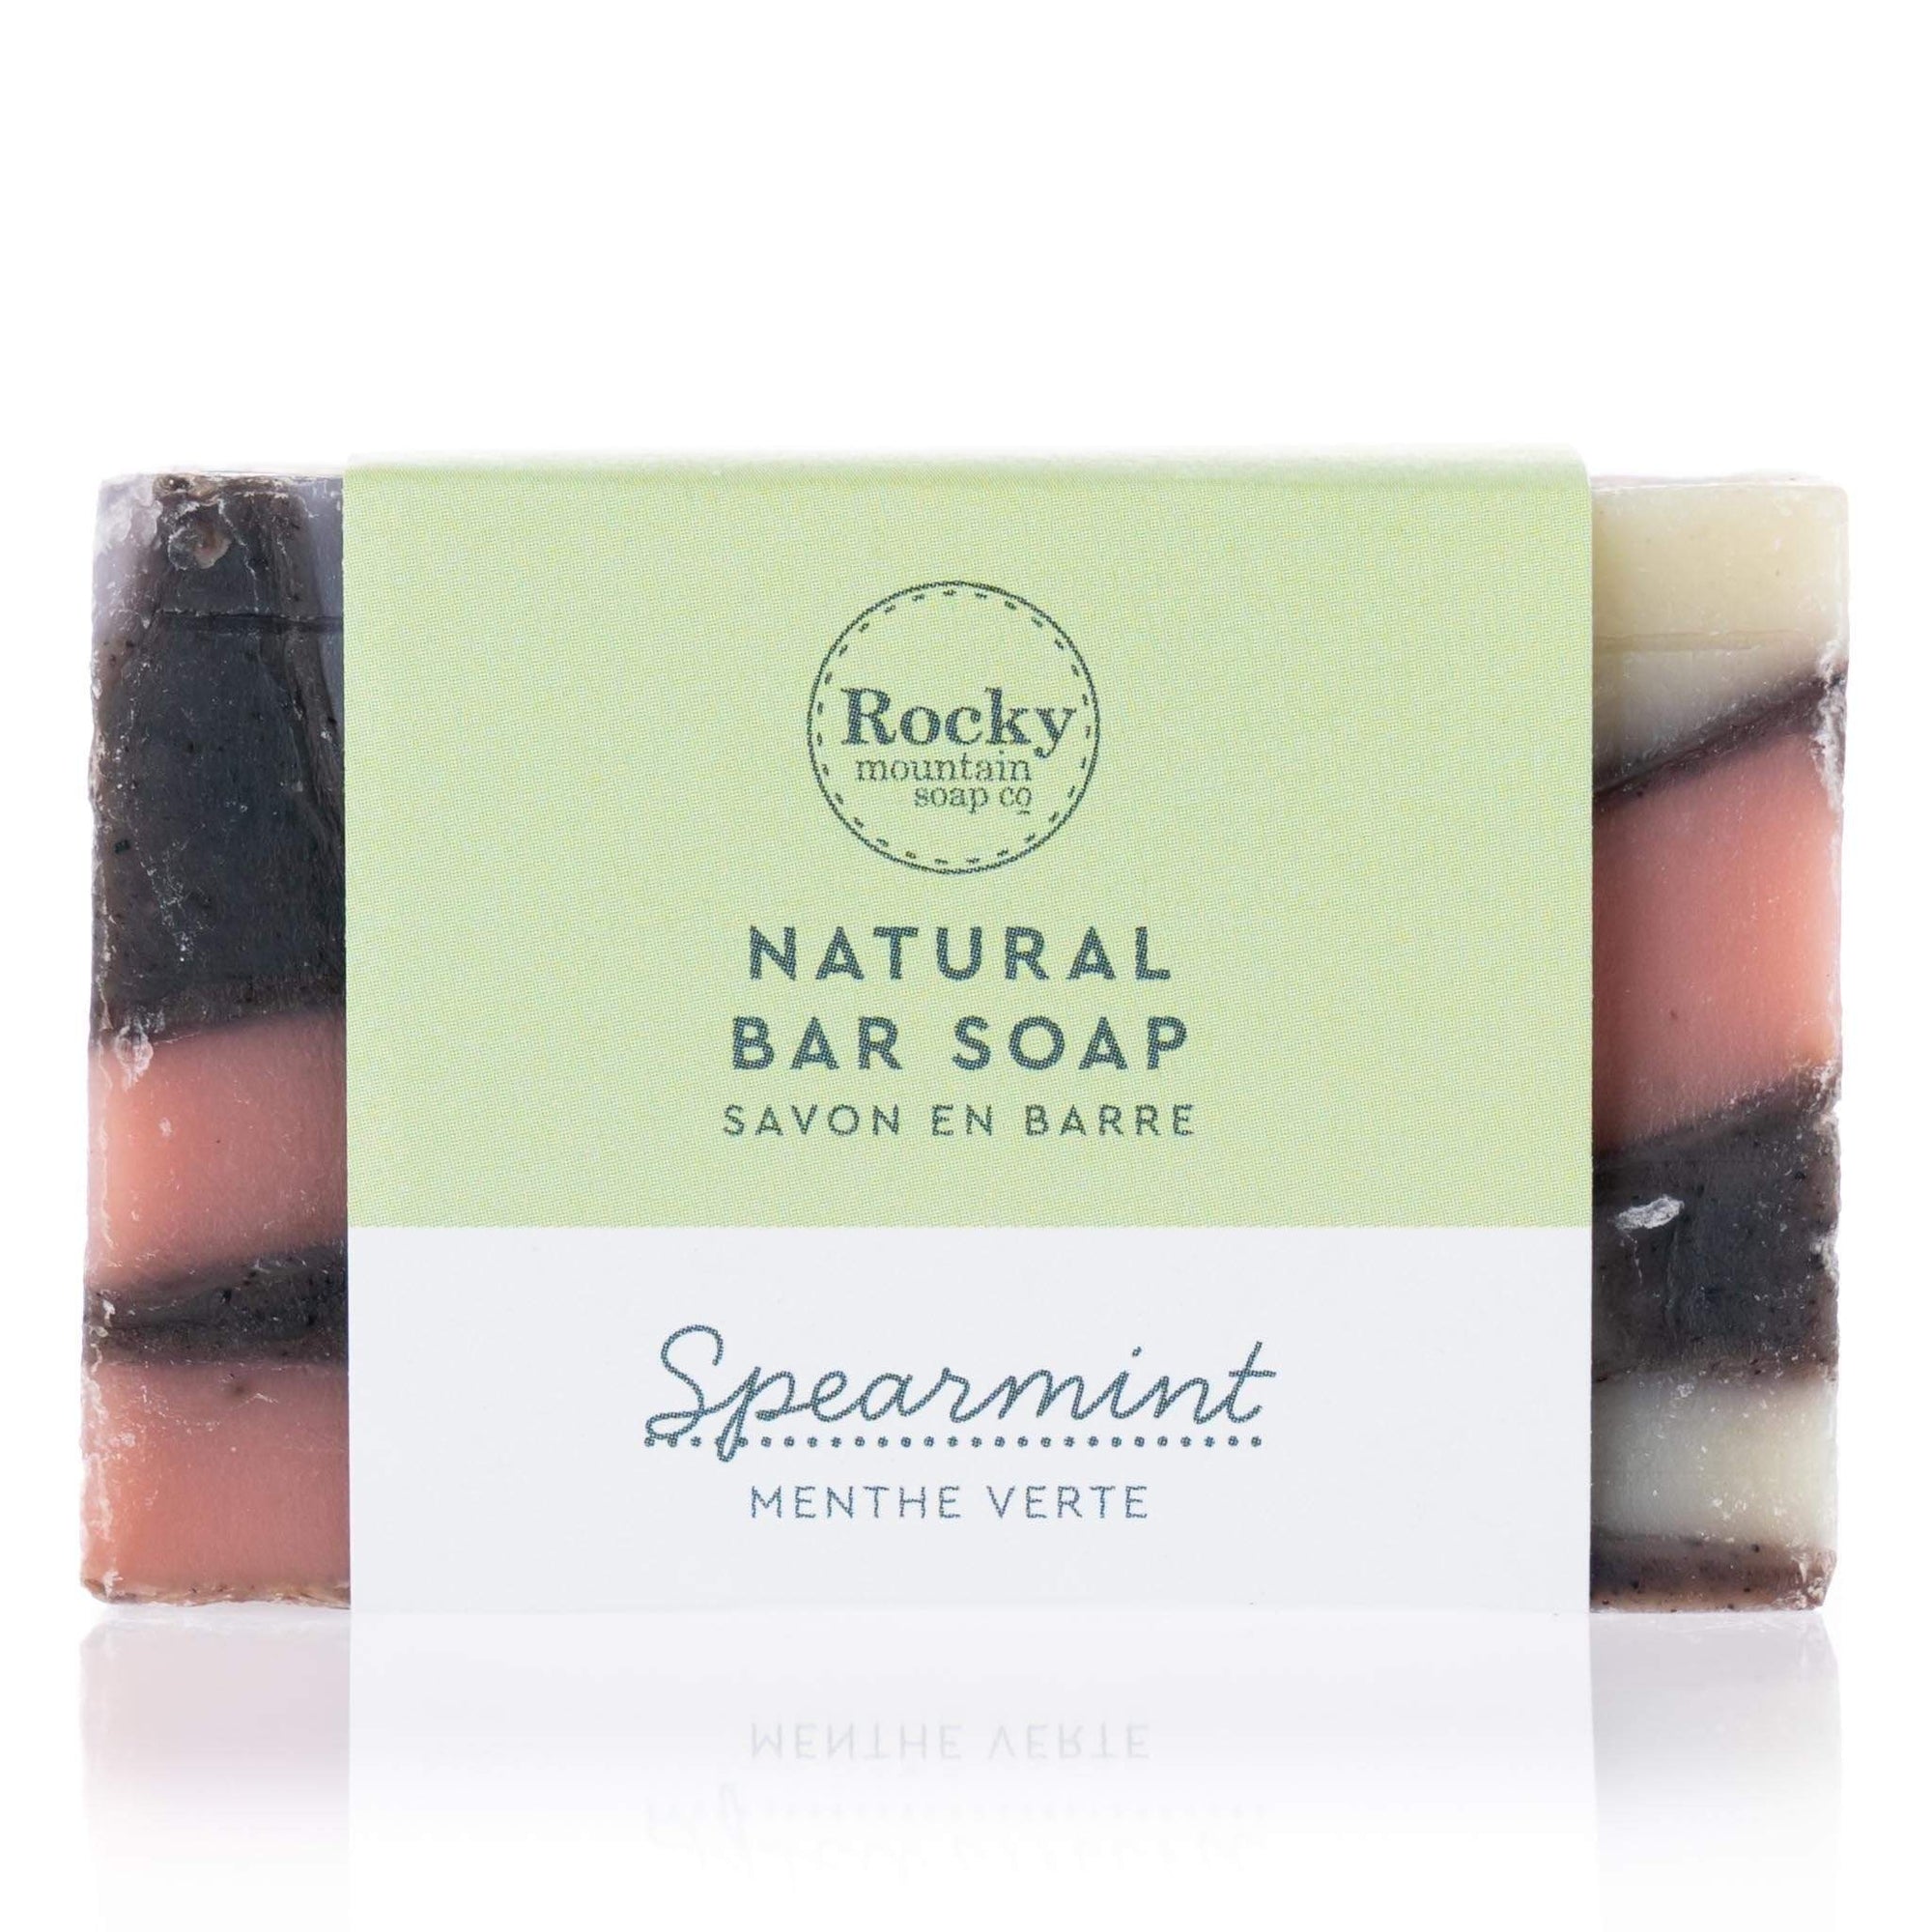 spearmint soap bar - natural